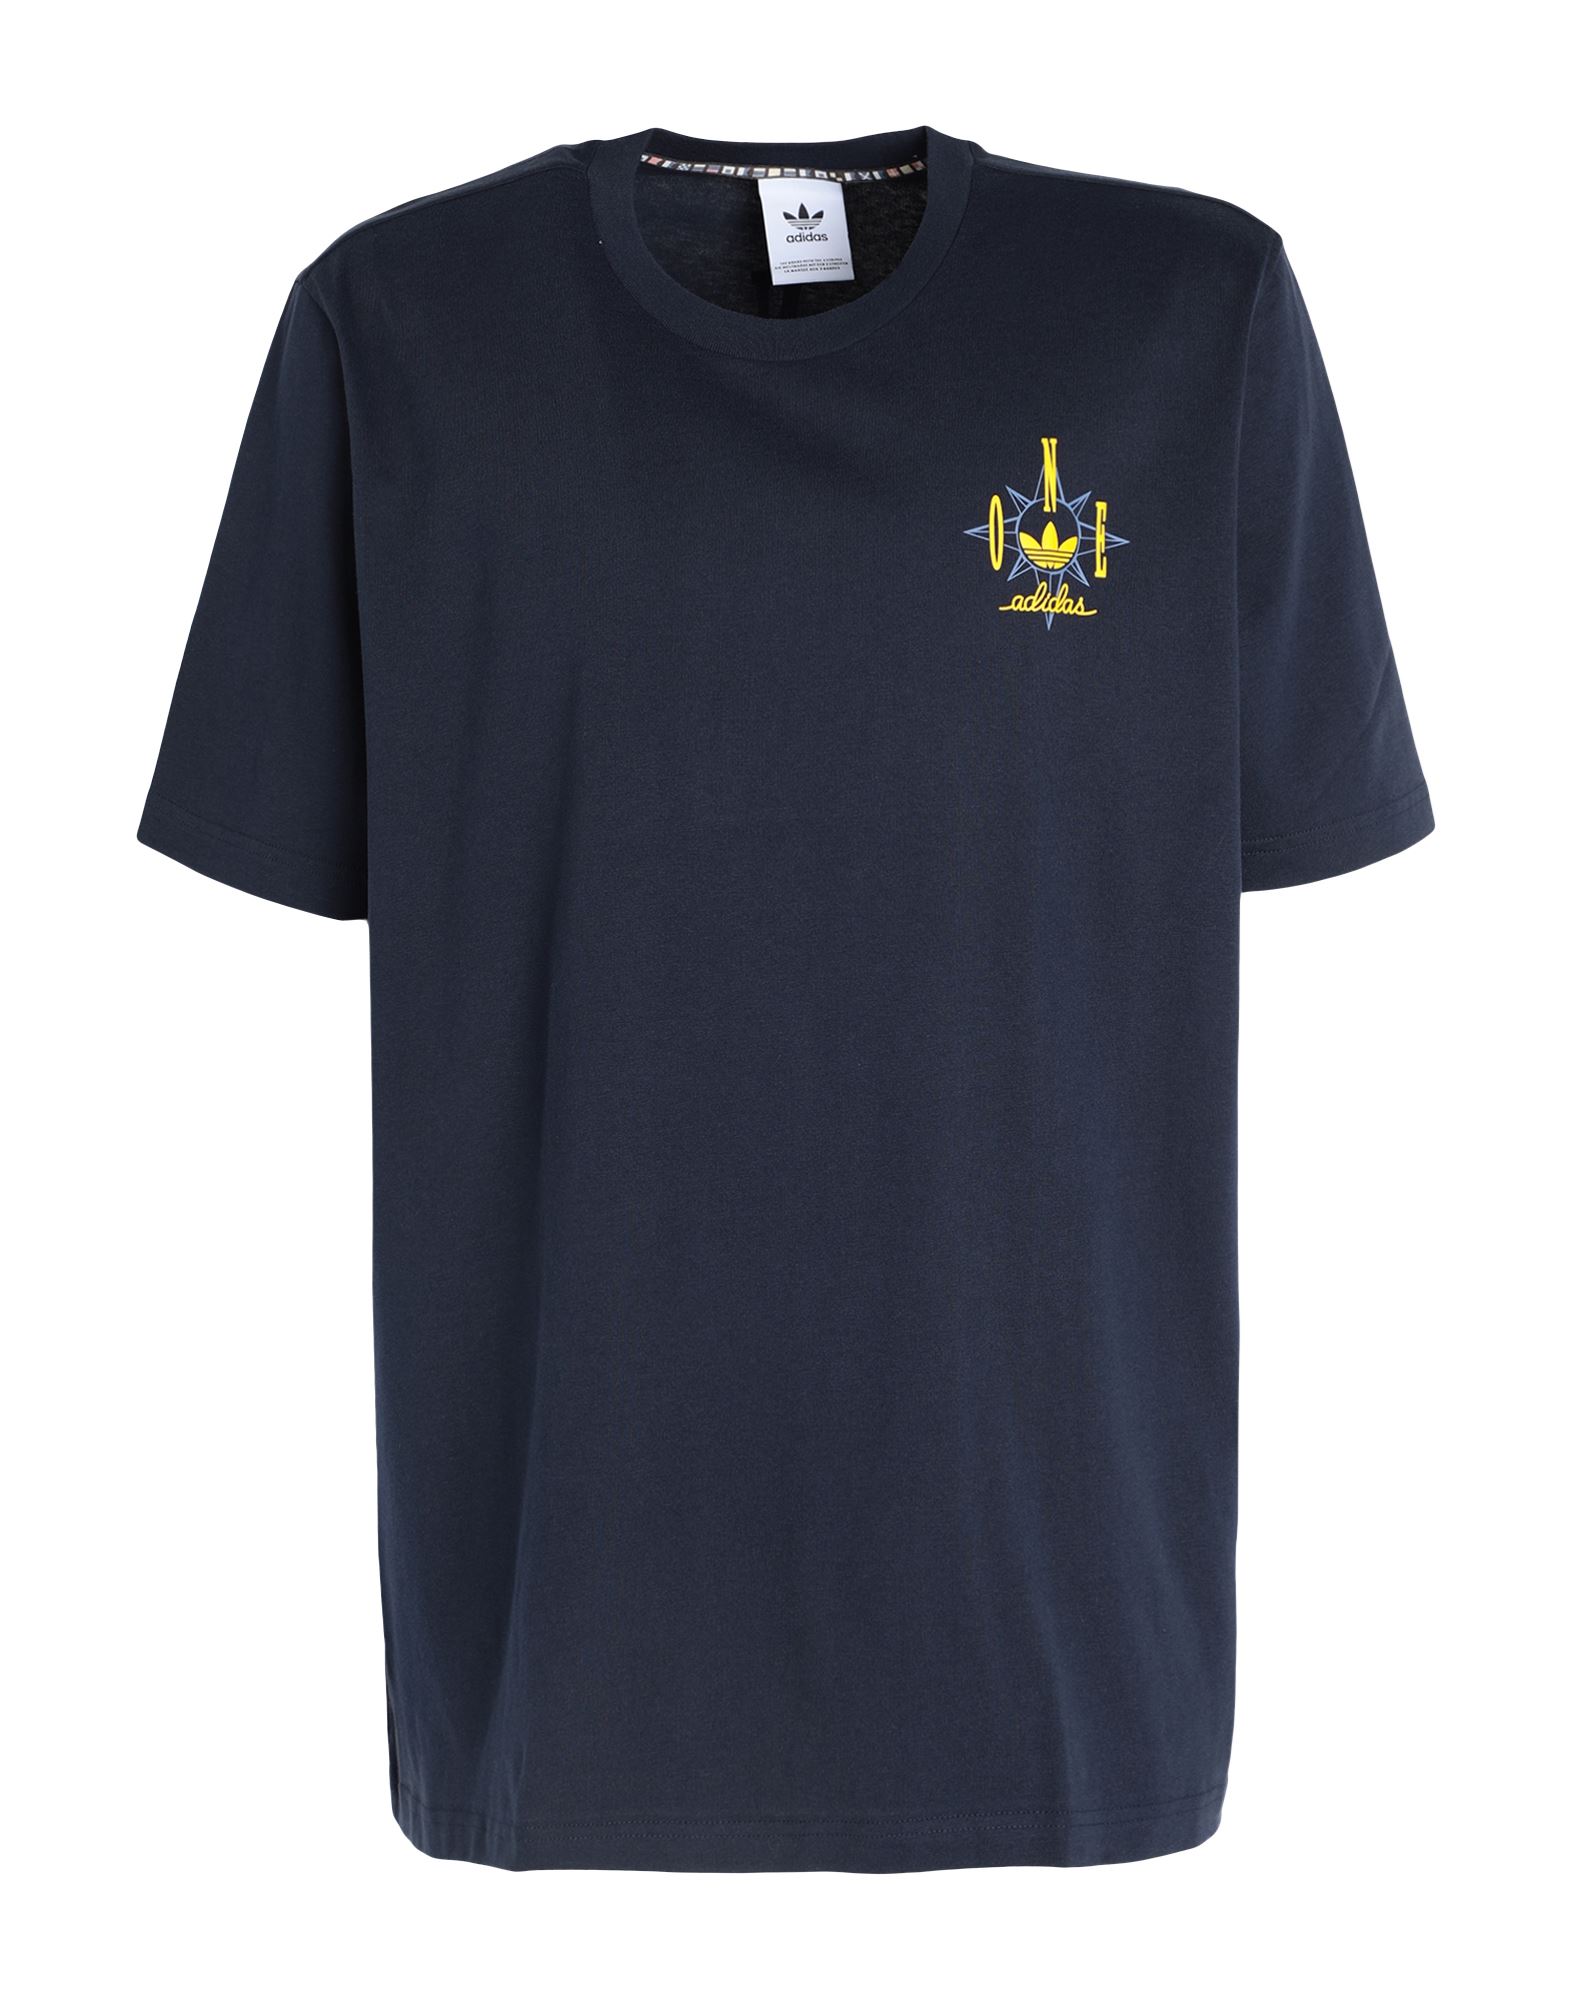 ADIDAS ORIGINALS T-shirts Herren Marineblau von ADIDAS ORIGINALS